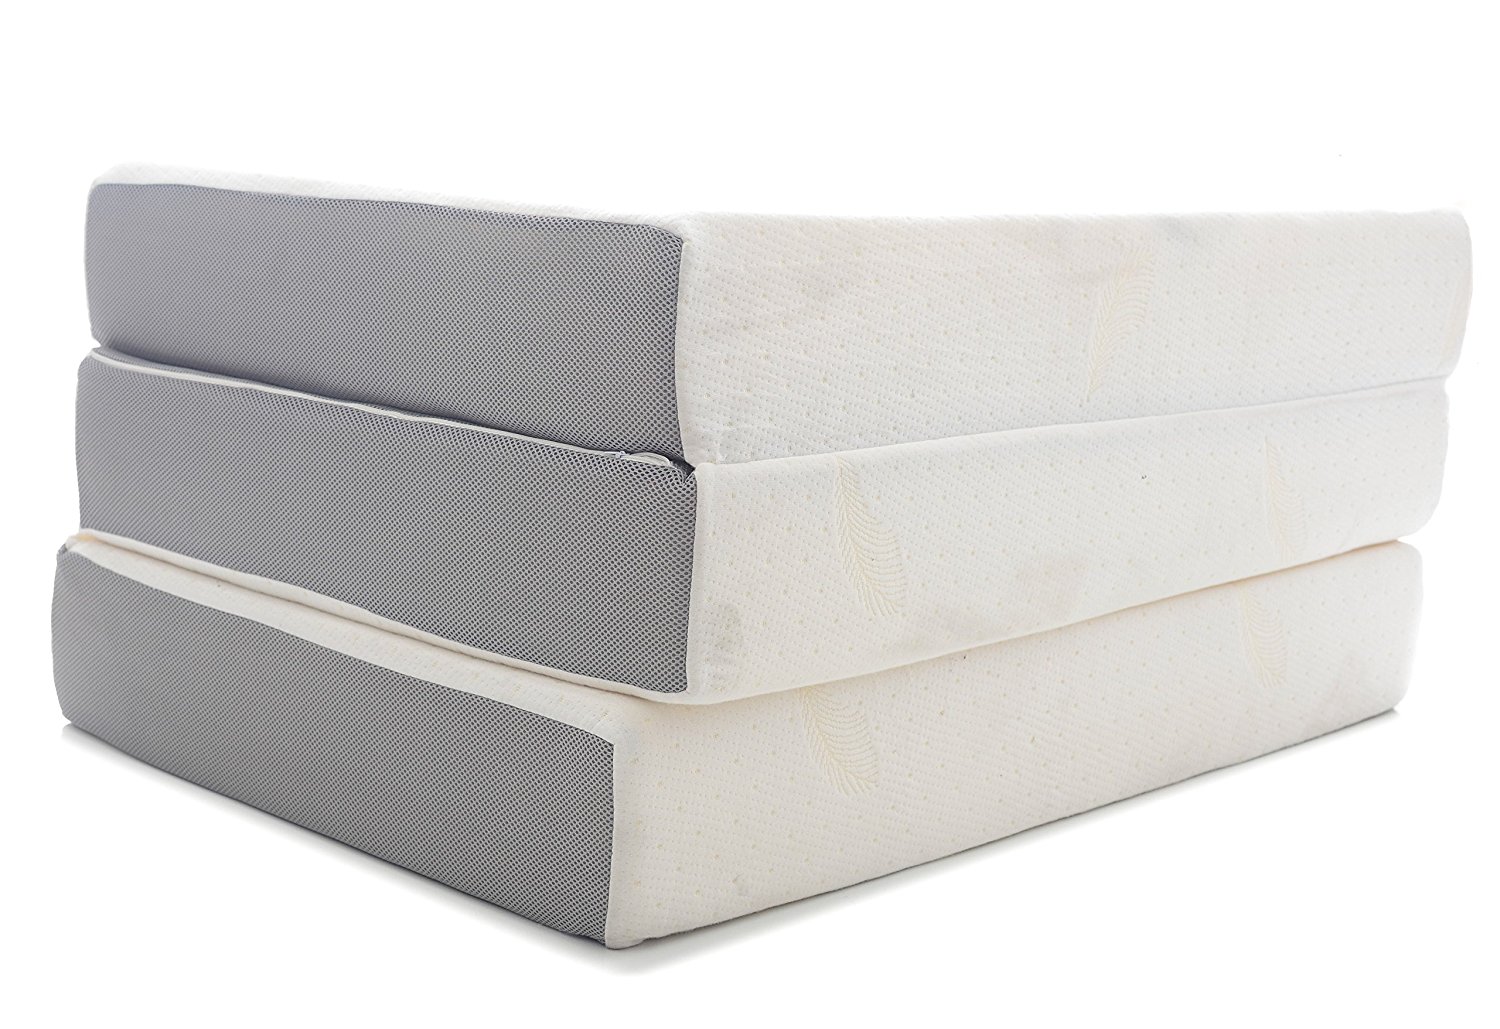 milliard replacement cover 6-inch tri-fold mattress